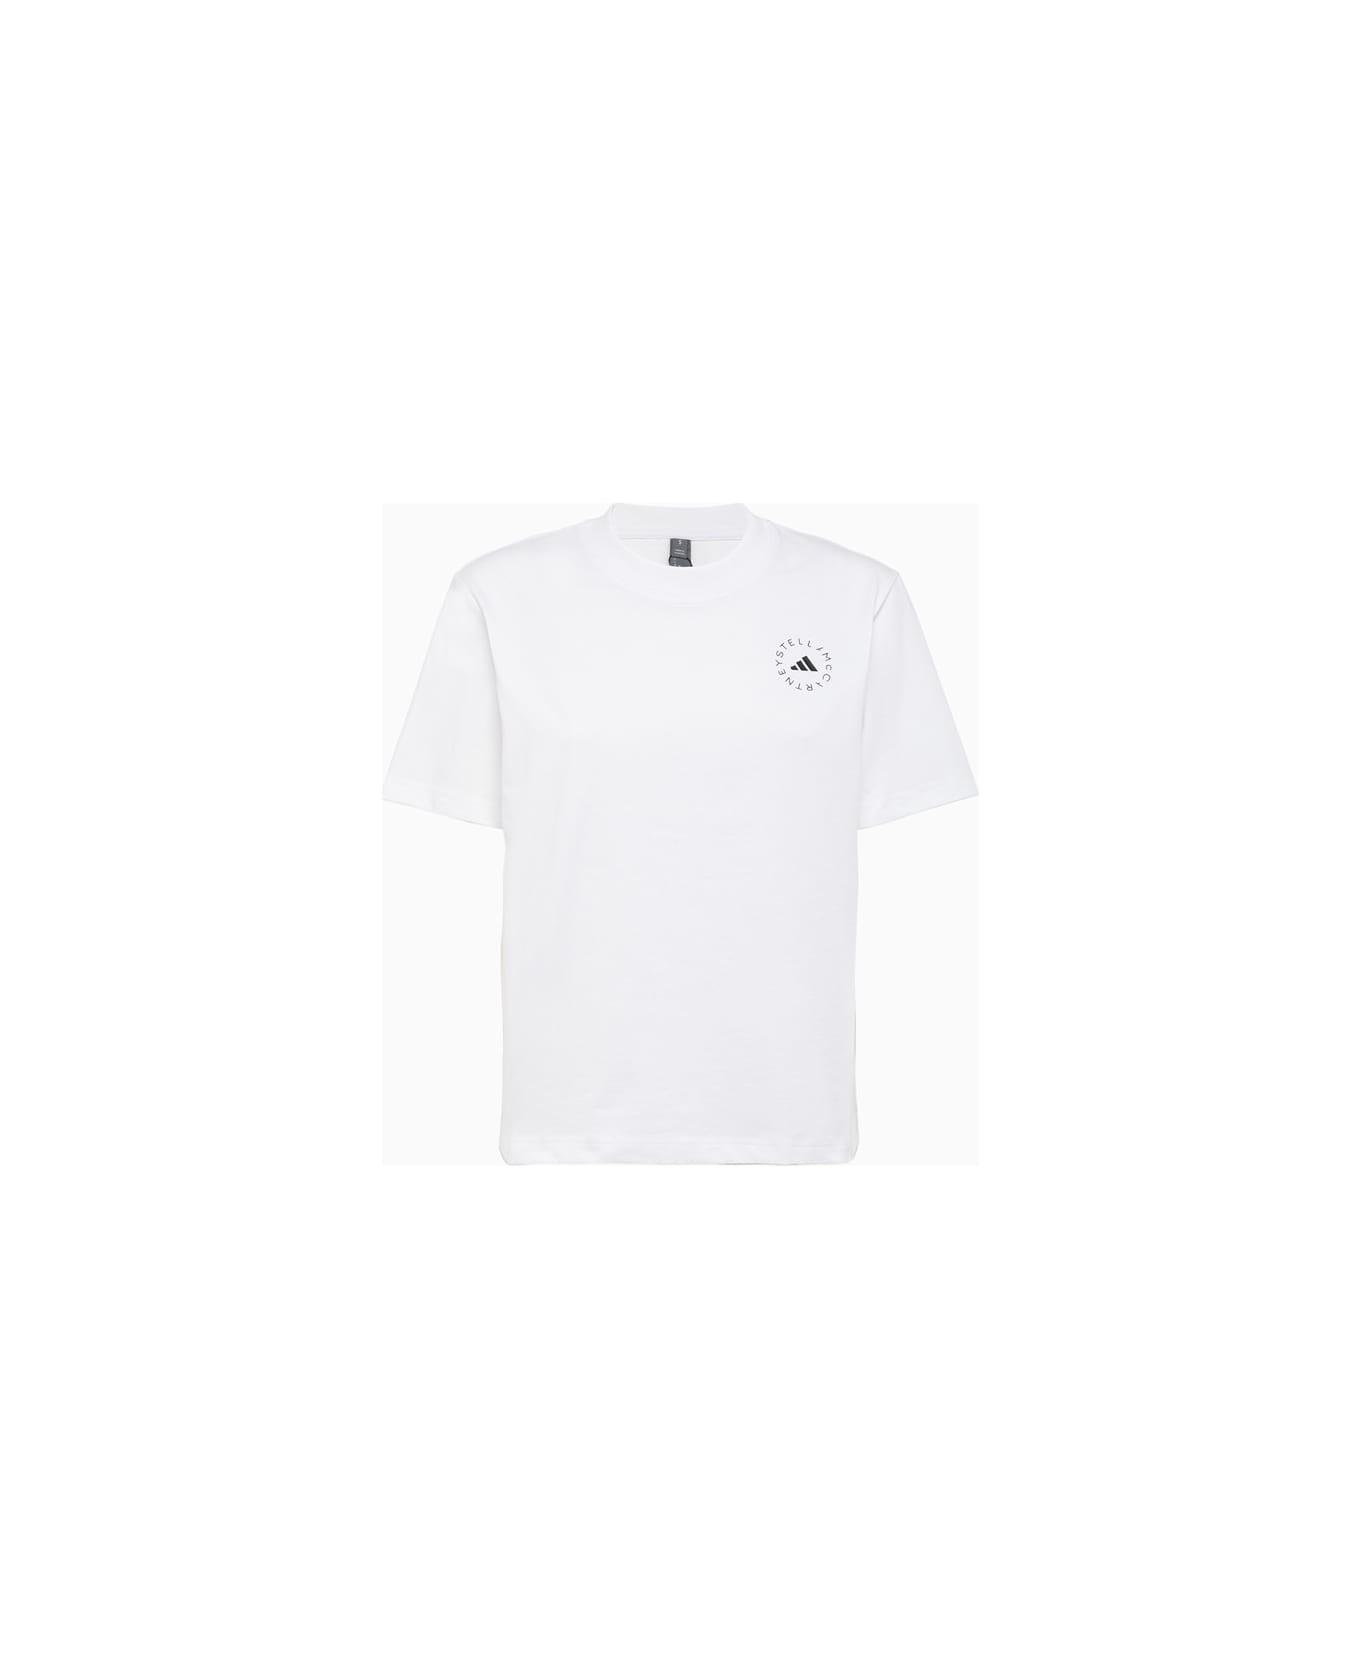 Adidas by Stella McCartney T-shirt Hr9167 - White